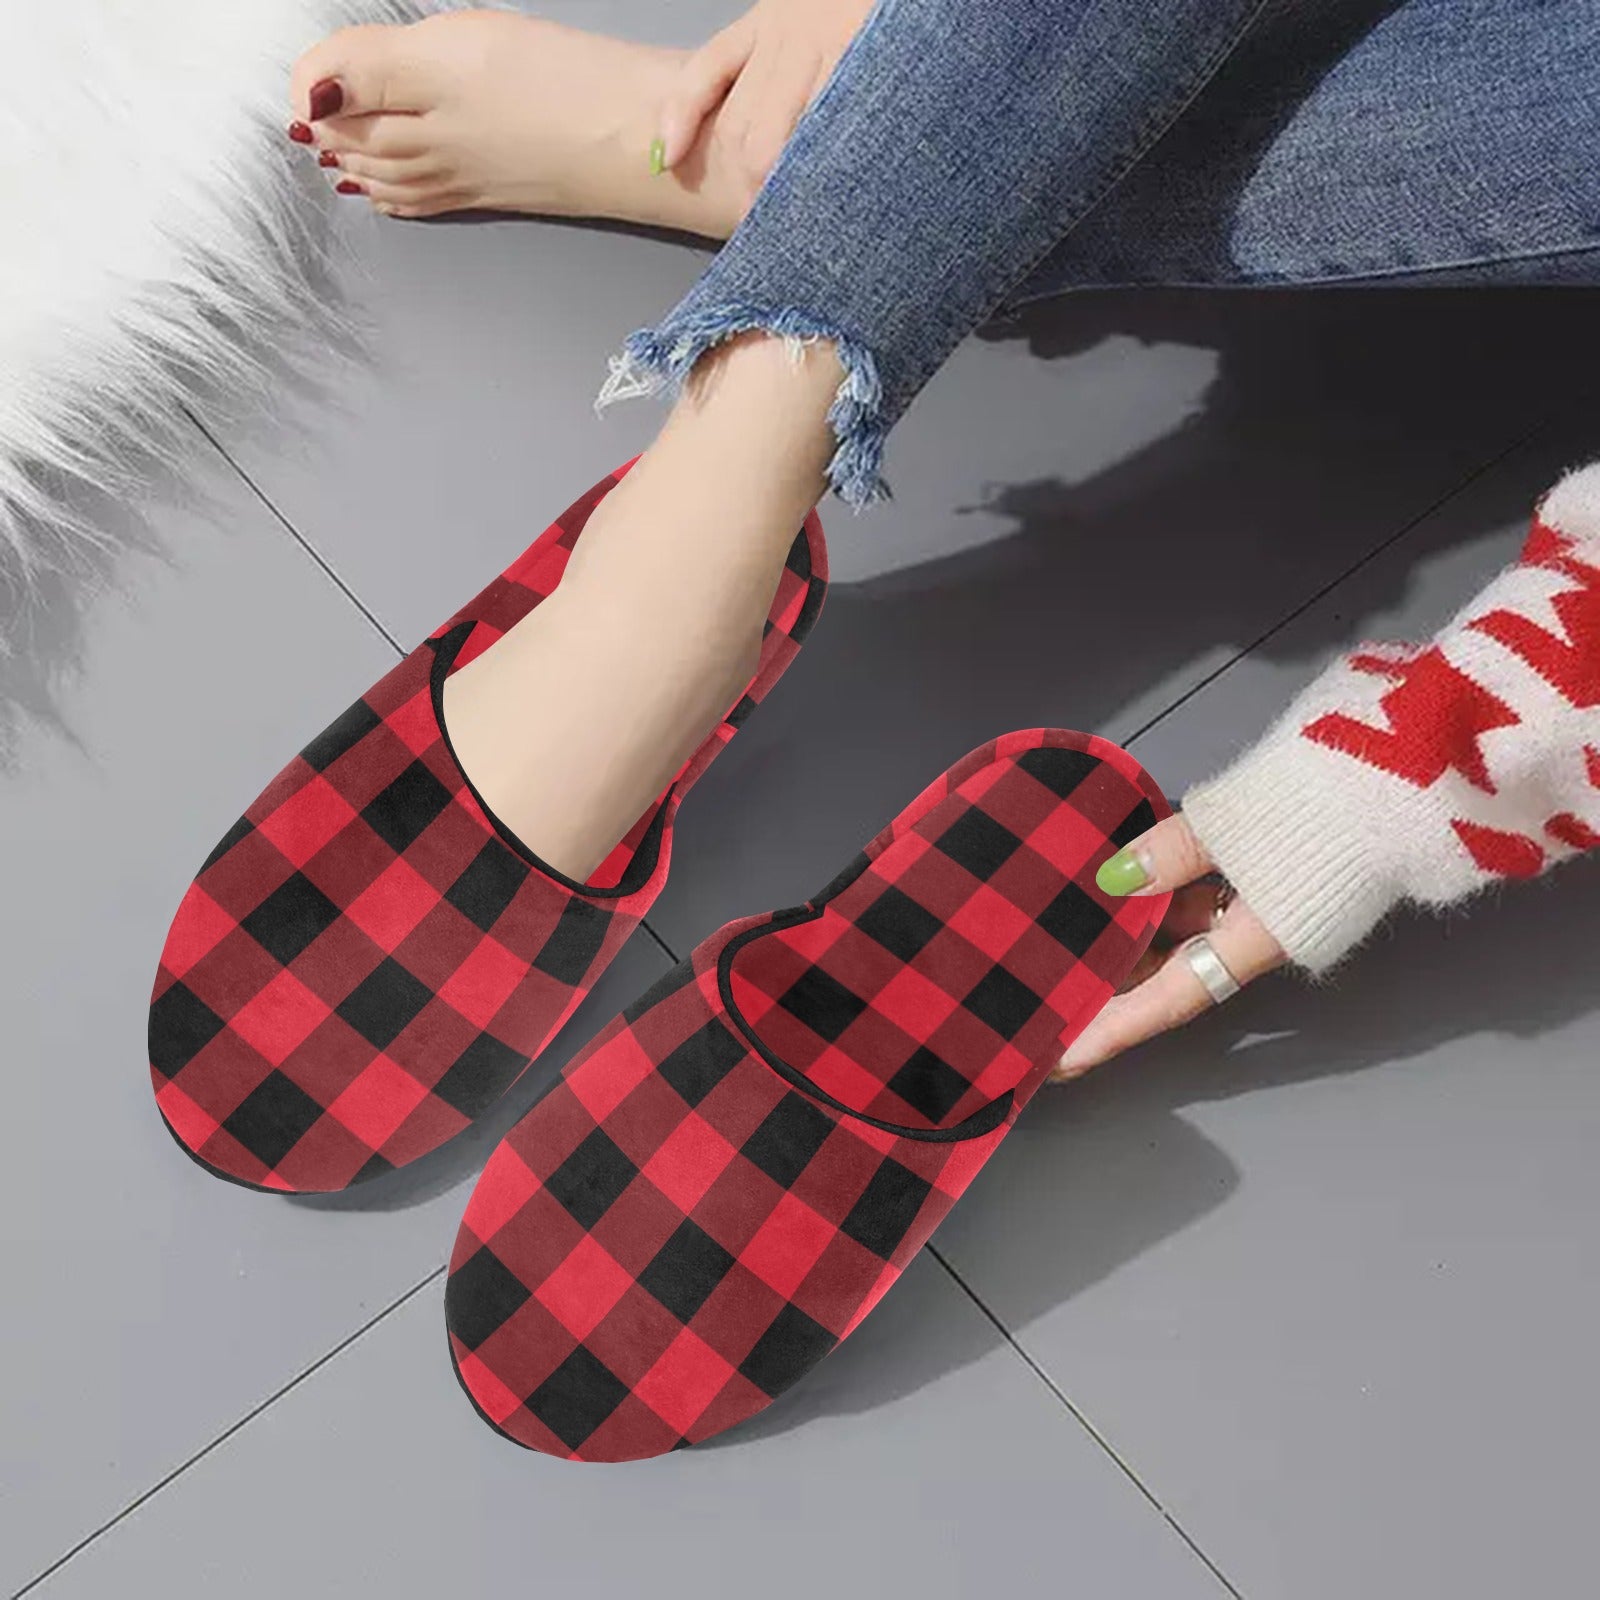 Buffalo Plaid Women's House Slide Slippers, Red Black Check Christmas Handmade Bedroom Cozy Winter Shoes Starcove Fashion